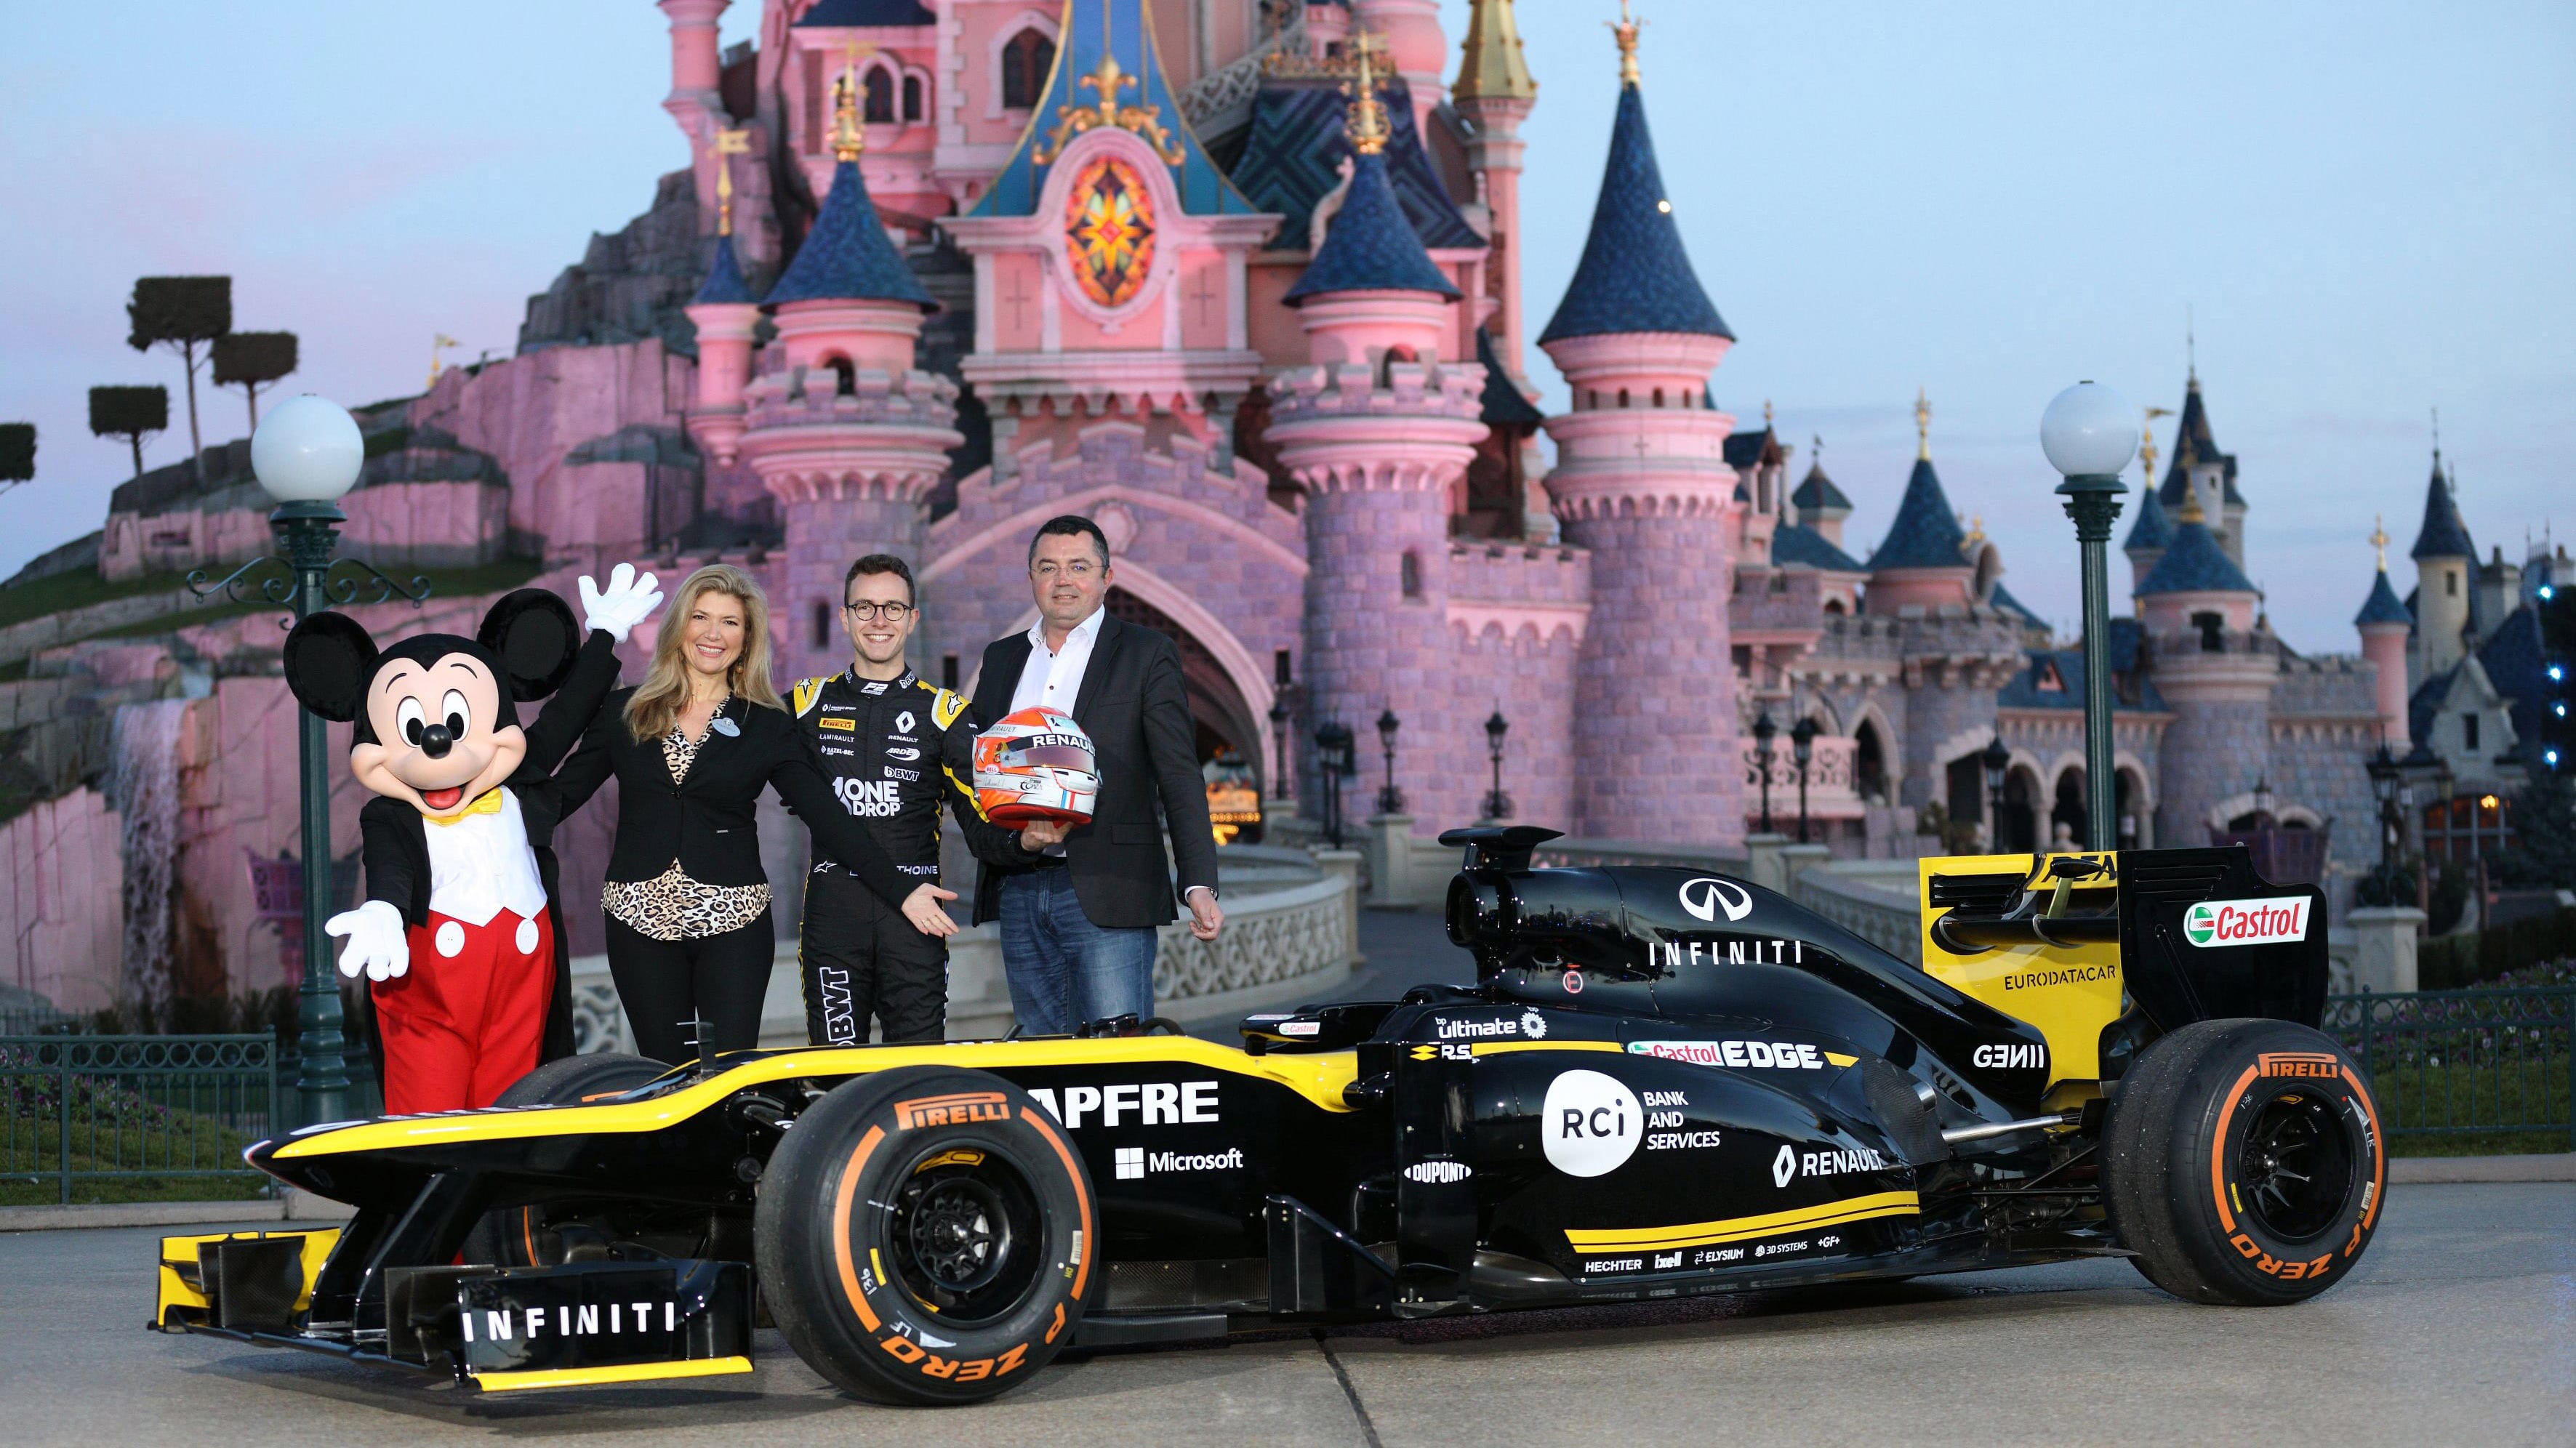 The Formula 1 Grand Prix de France and Renault F1 Team start roadshow at Disneyland Paris